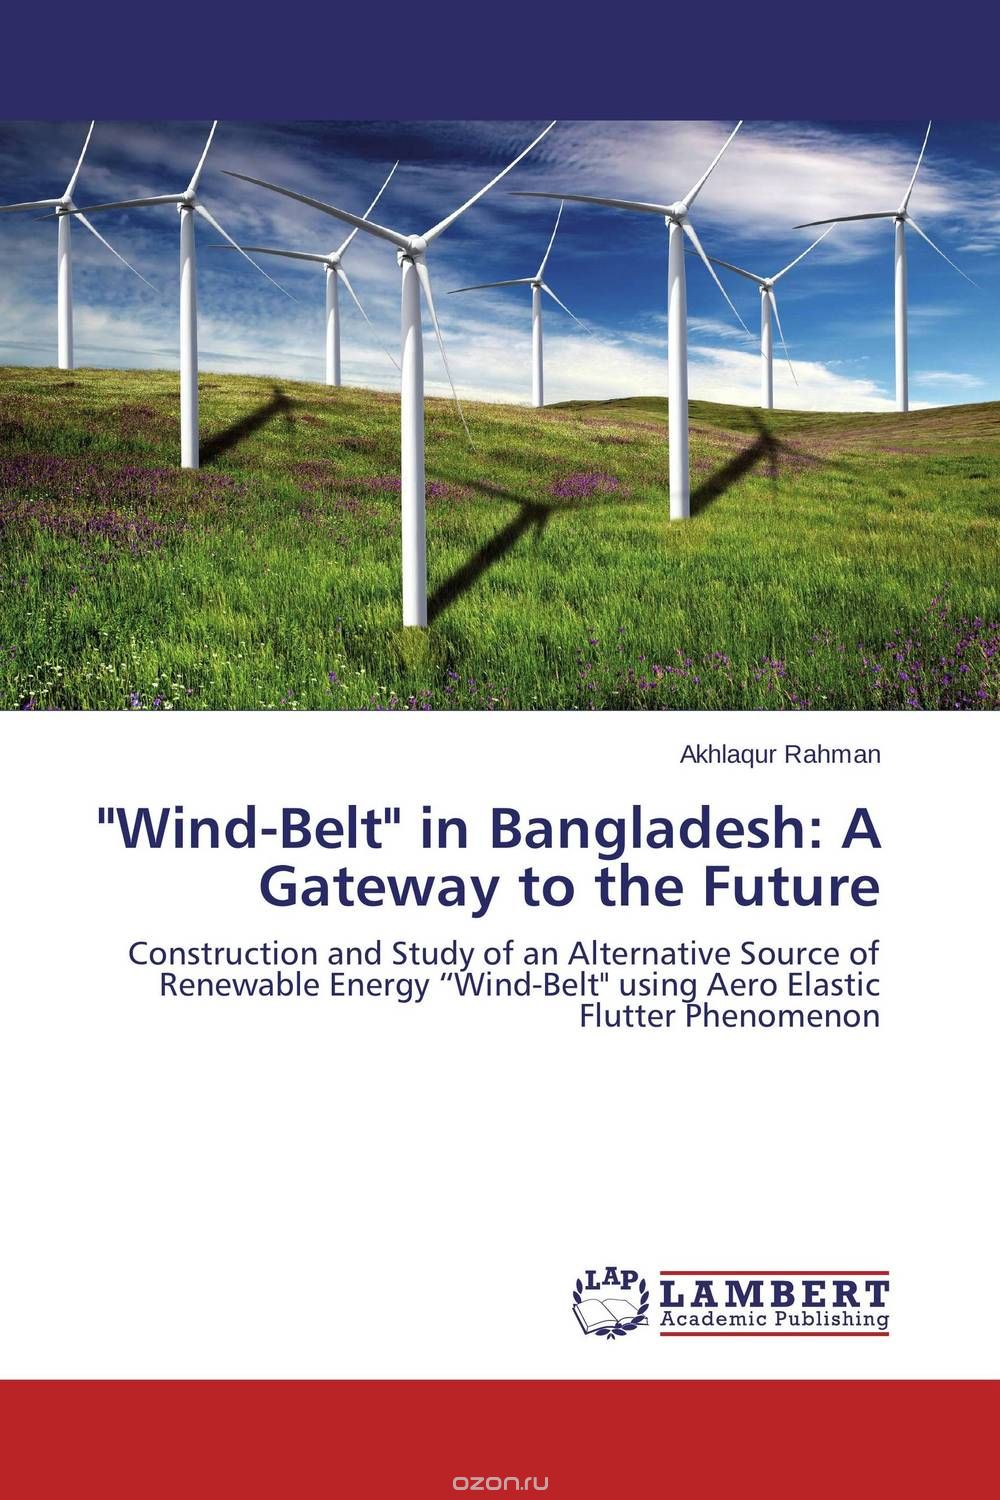 "Wind-Belt" in Bangladesh: A Gateway to the Future